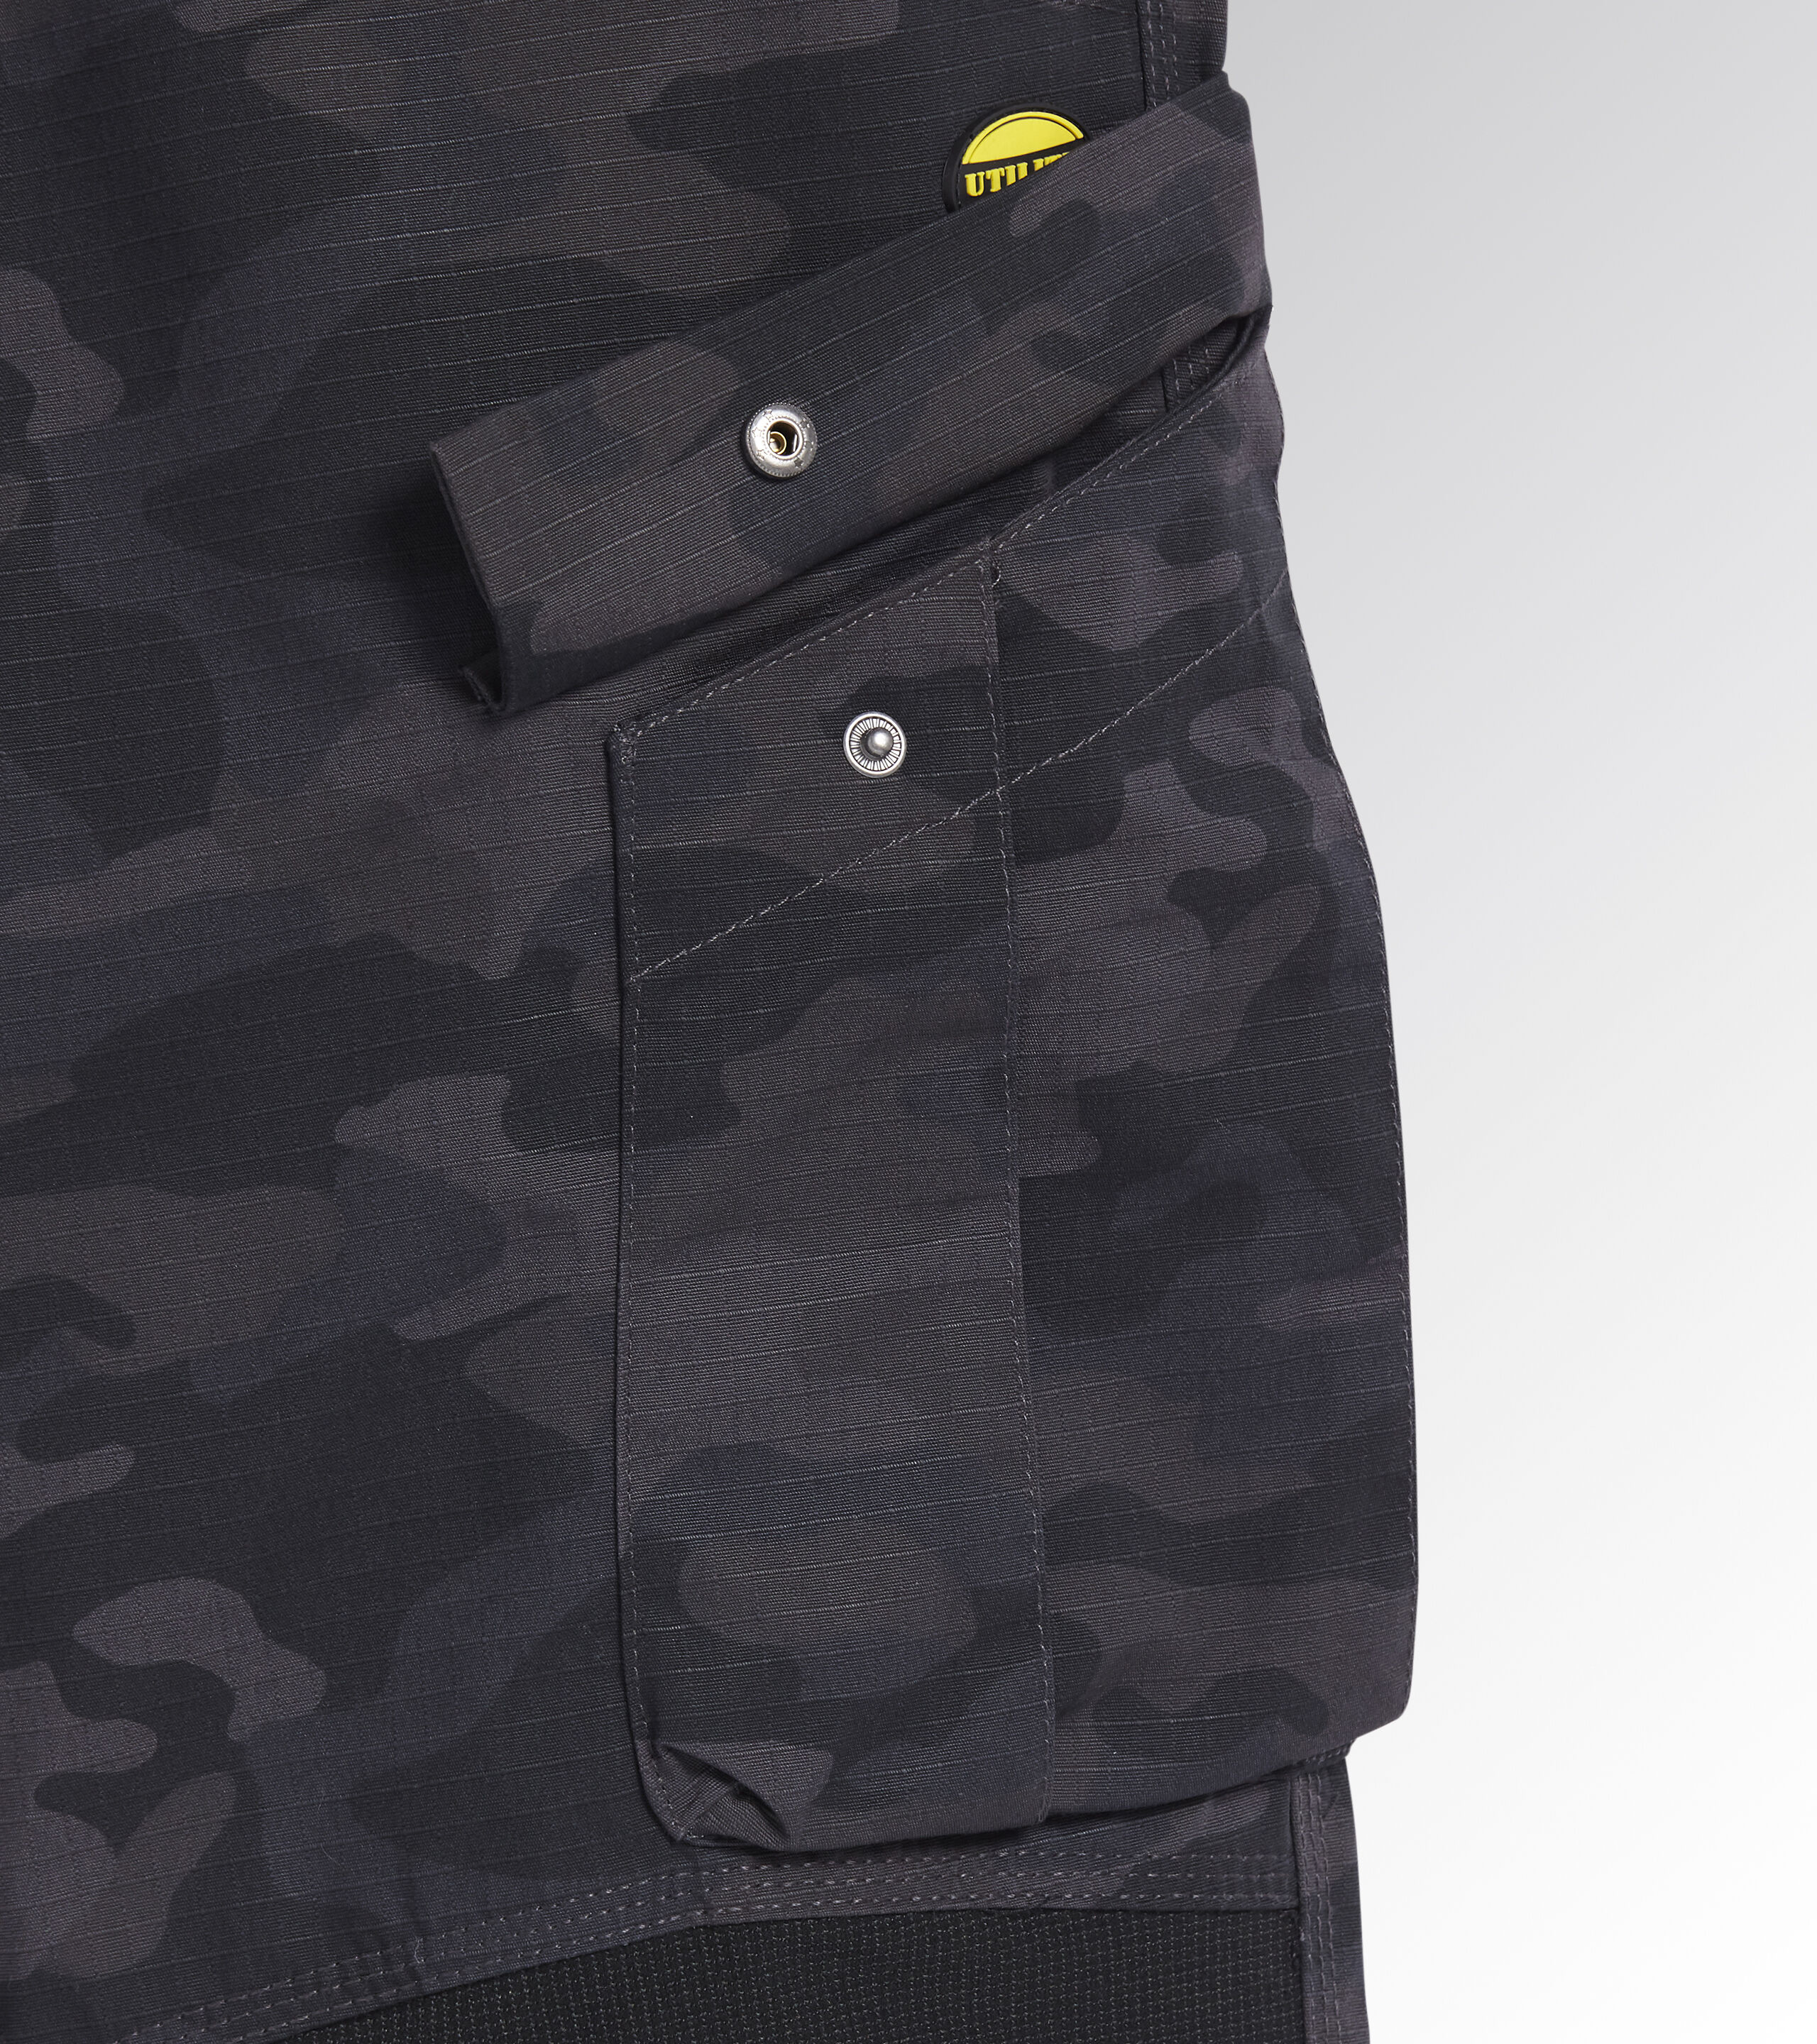 FCWJHNTSL Camo Pants Mens Military Multi Pocket Cargo Trousers Hip Hop  Jogger Urban Overalls Outwear Camouflage Tactical Pants Wholesale Black   Amazonde Fashion